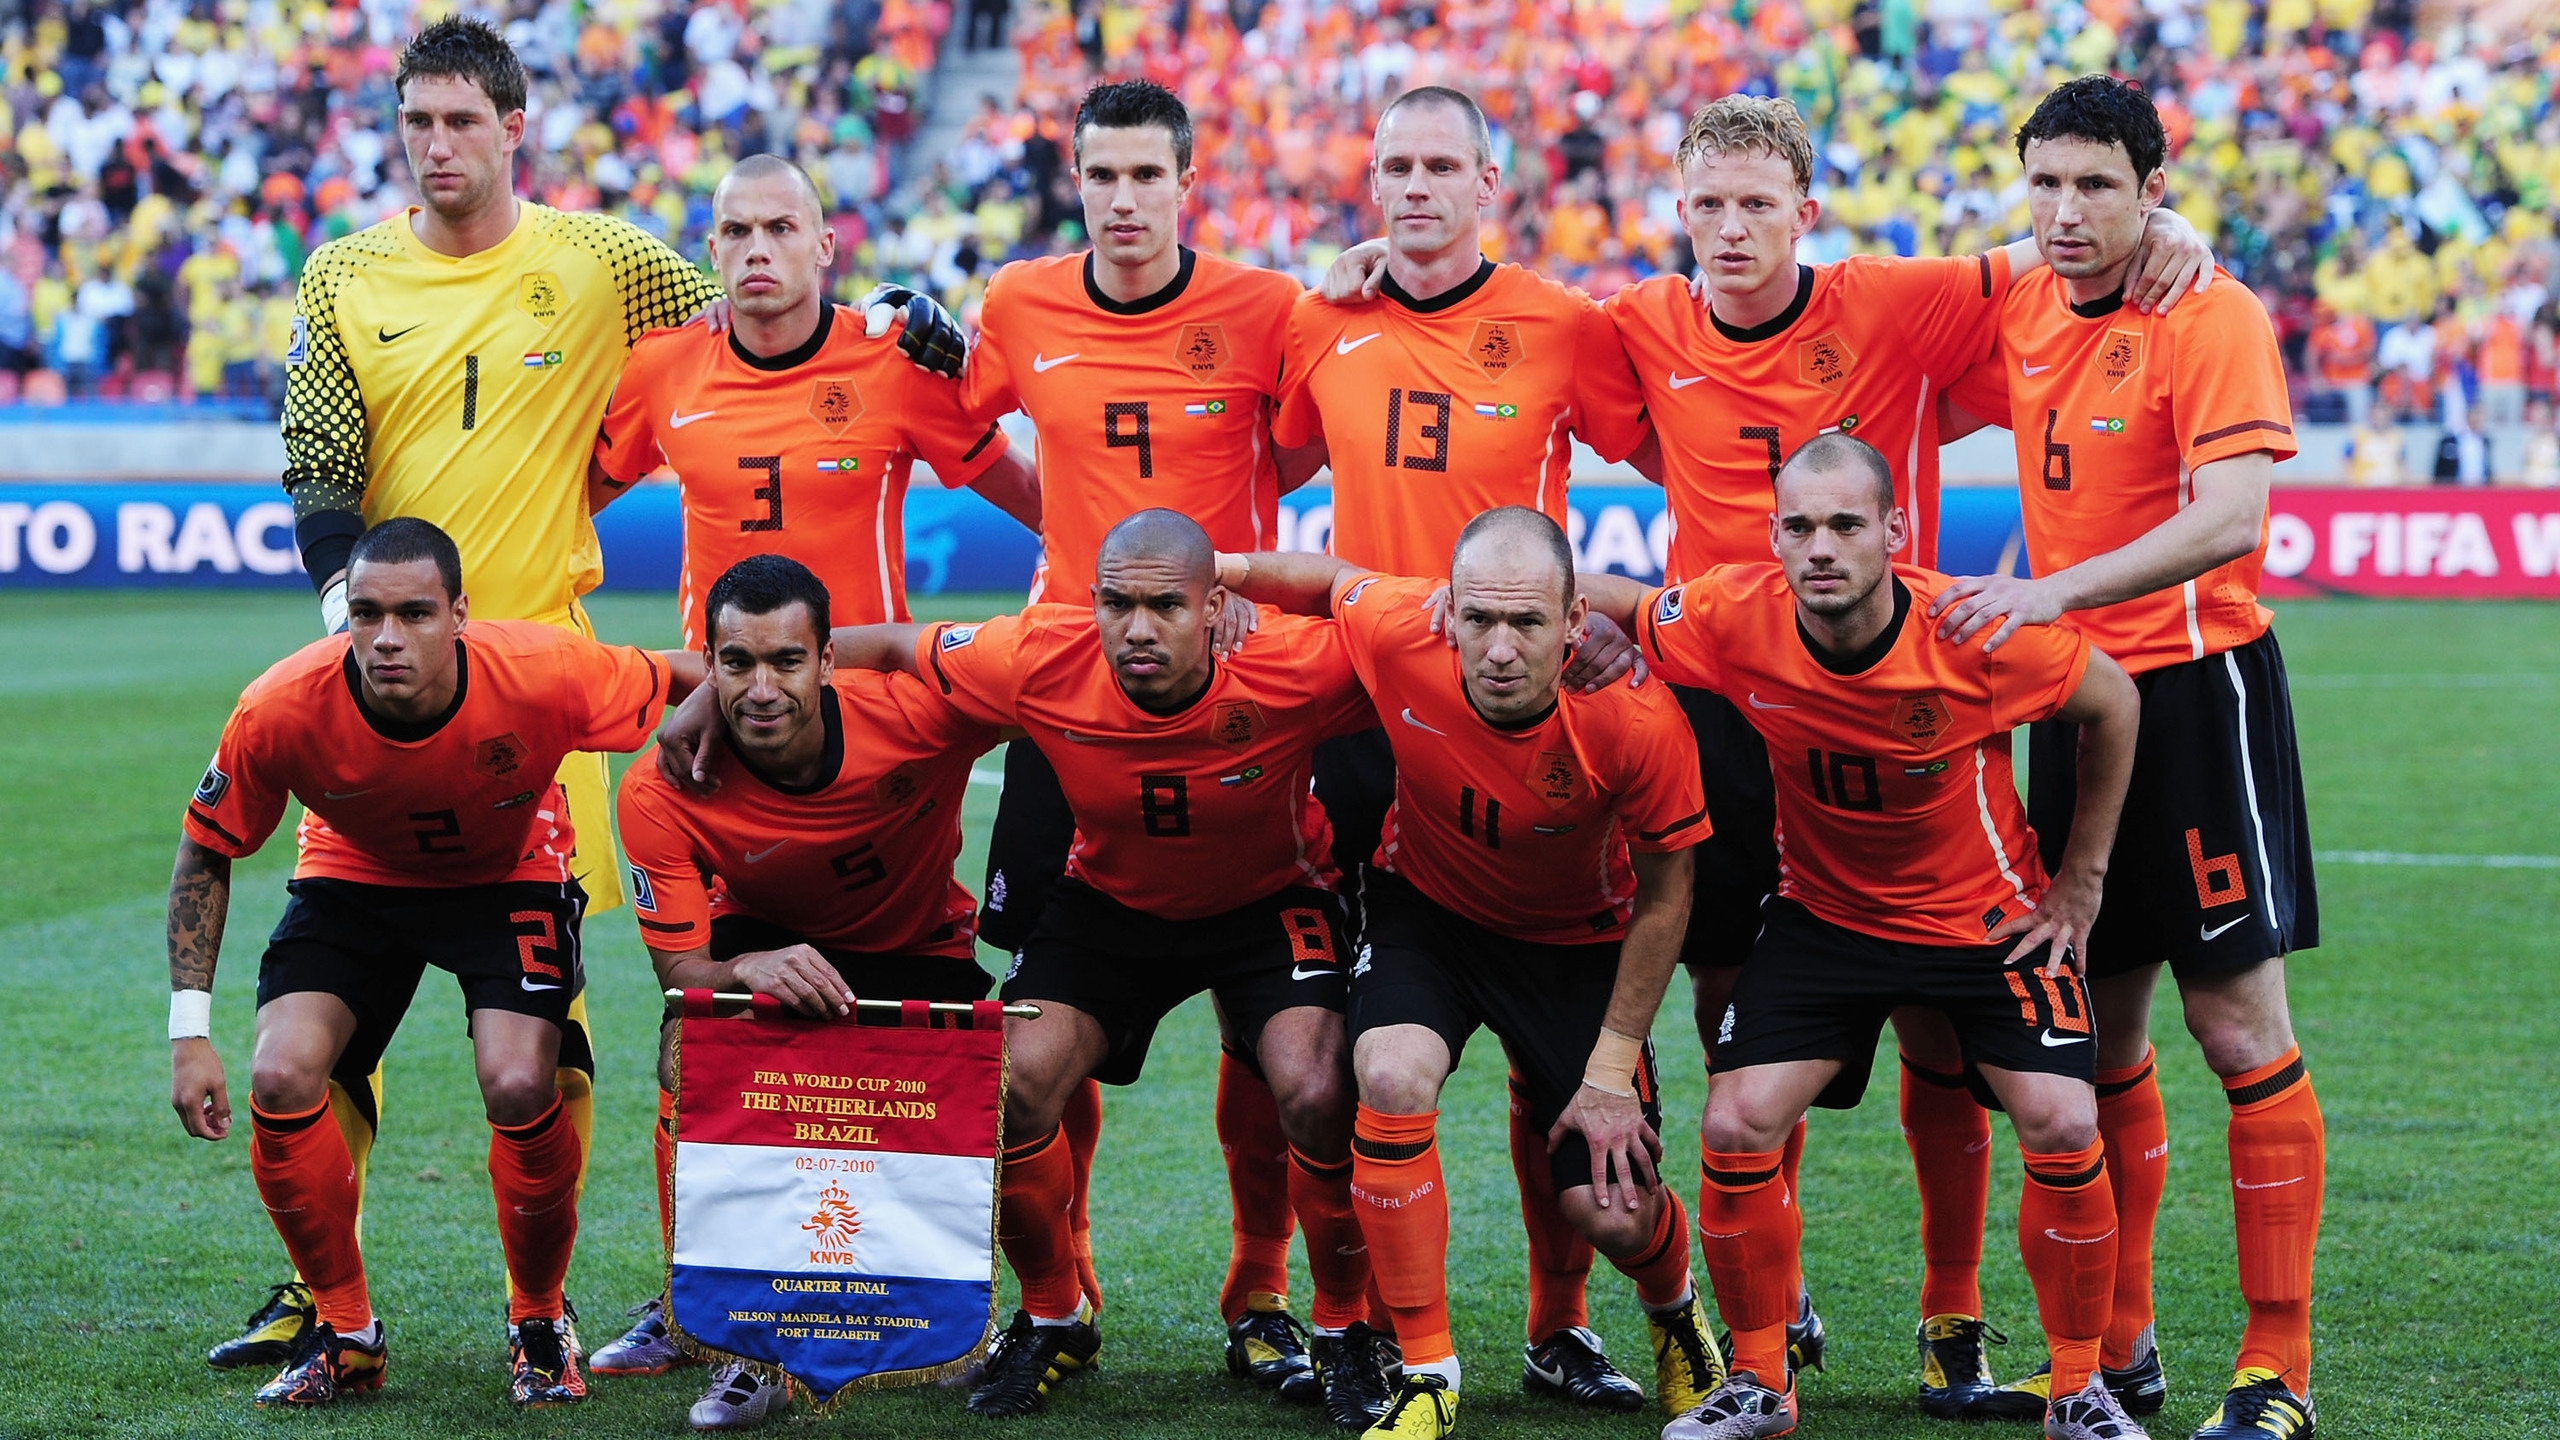 Football Holland Team for 2560x1440 HDTV resolution